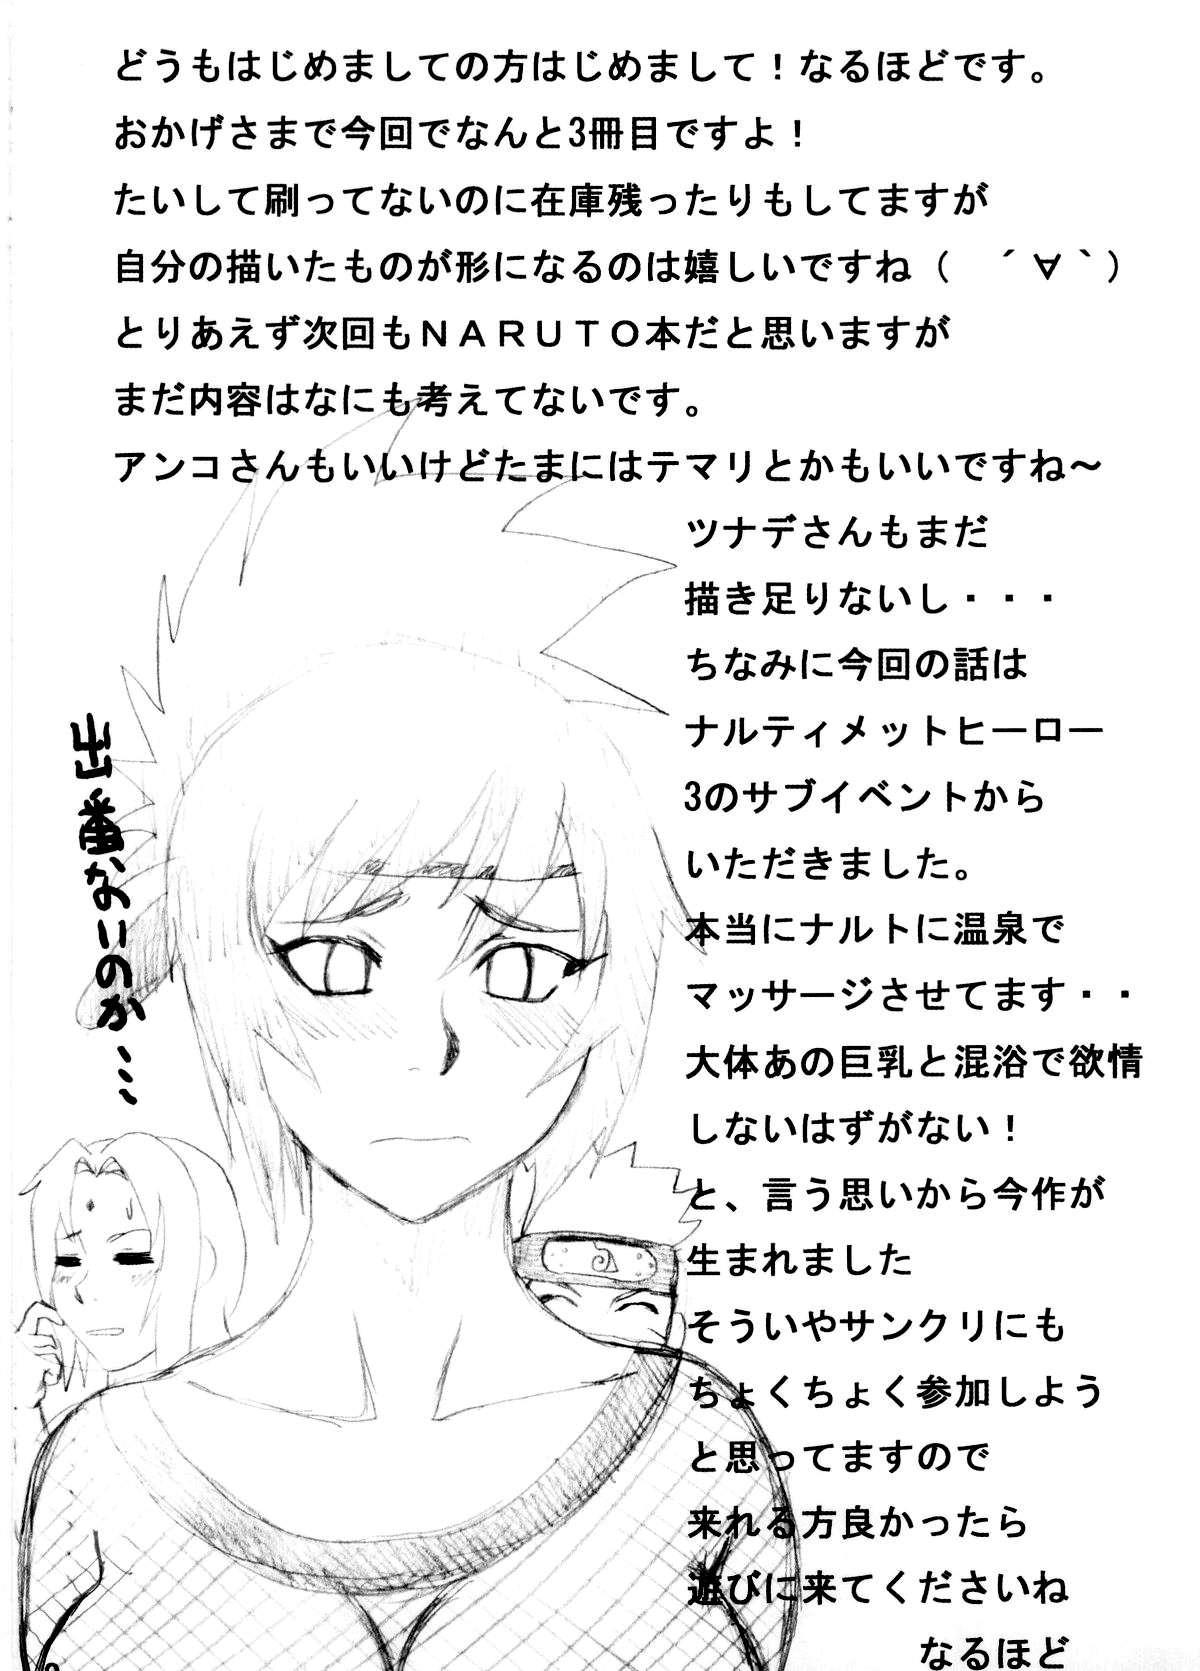 Fantasy Massage Kibun wa mou Onsen | Feels like Hot Springs - Naruto Gordita - Page 3